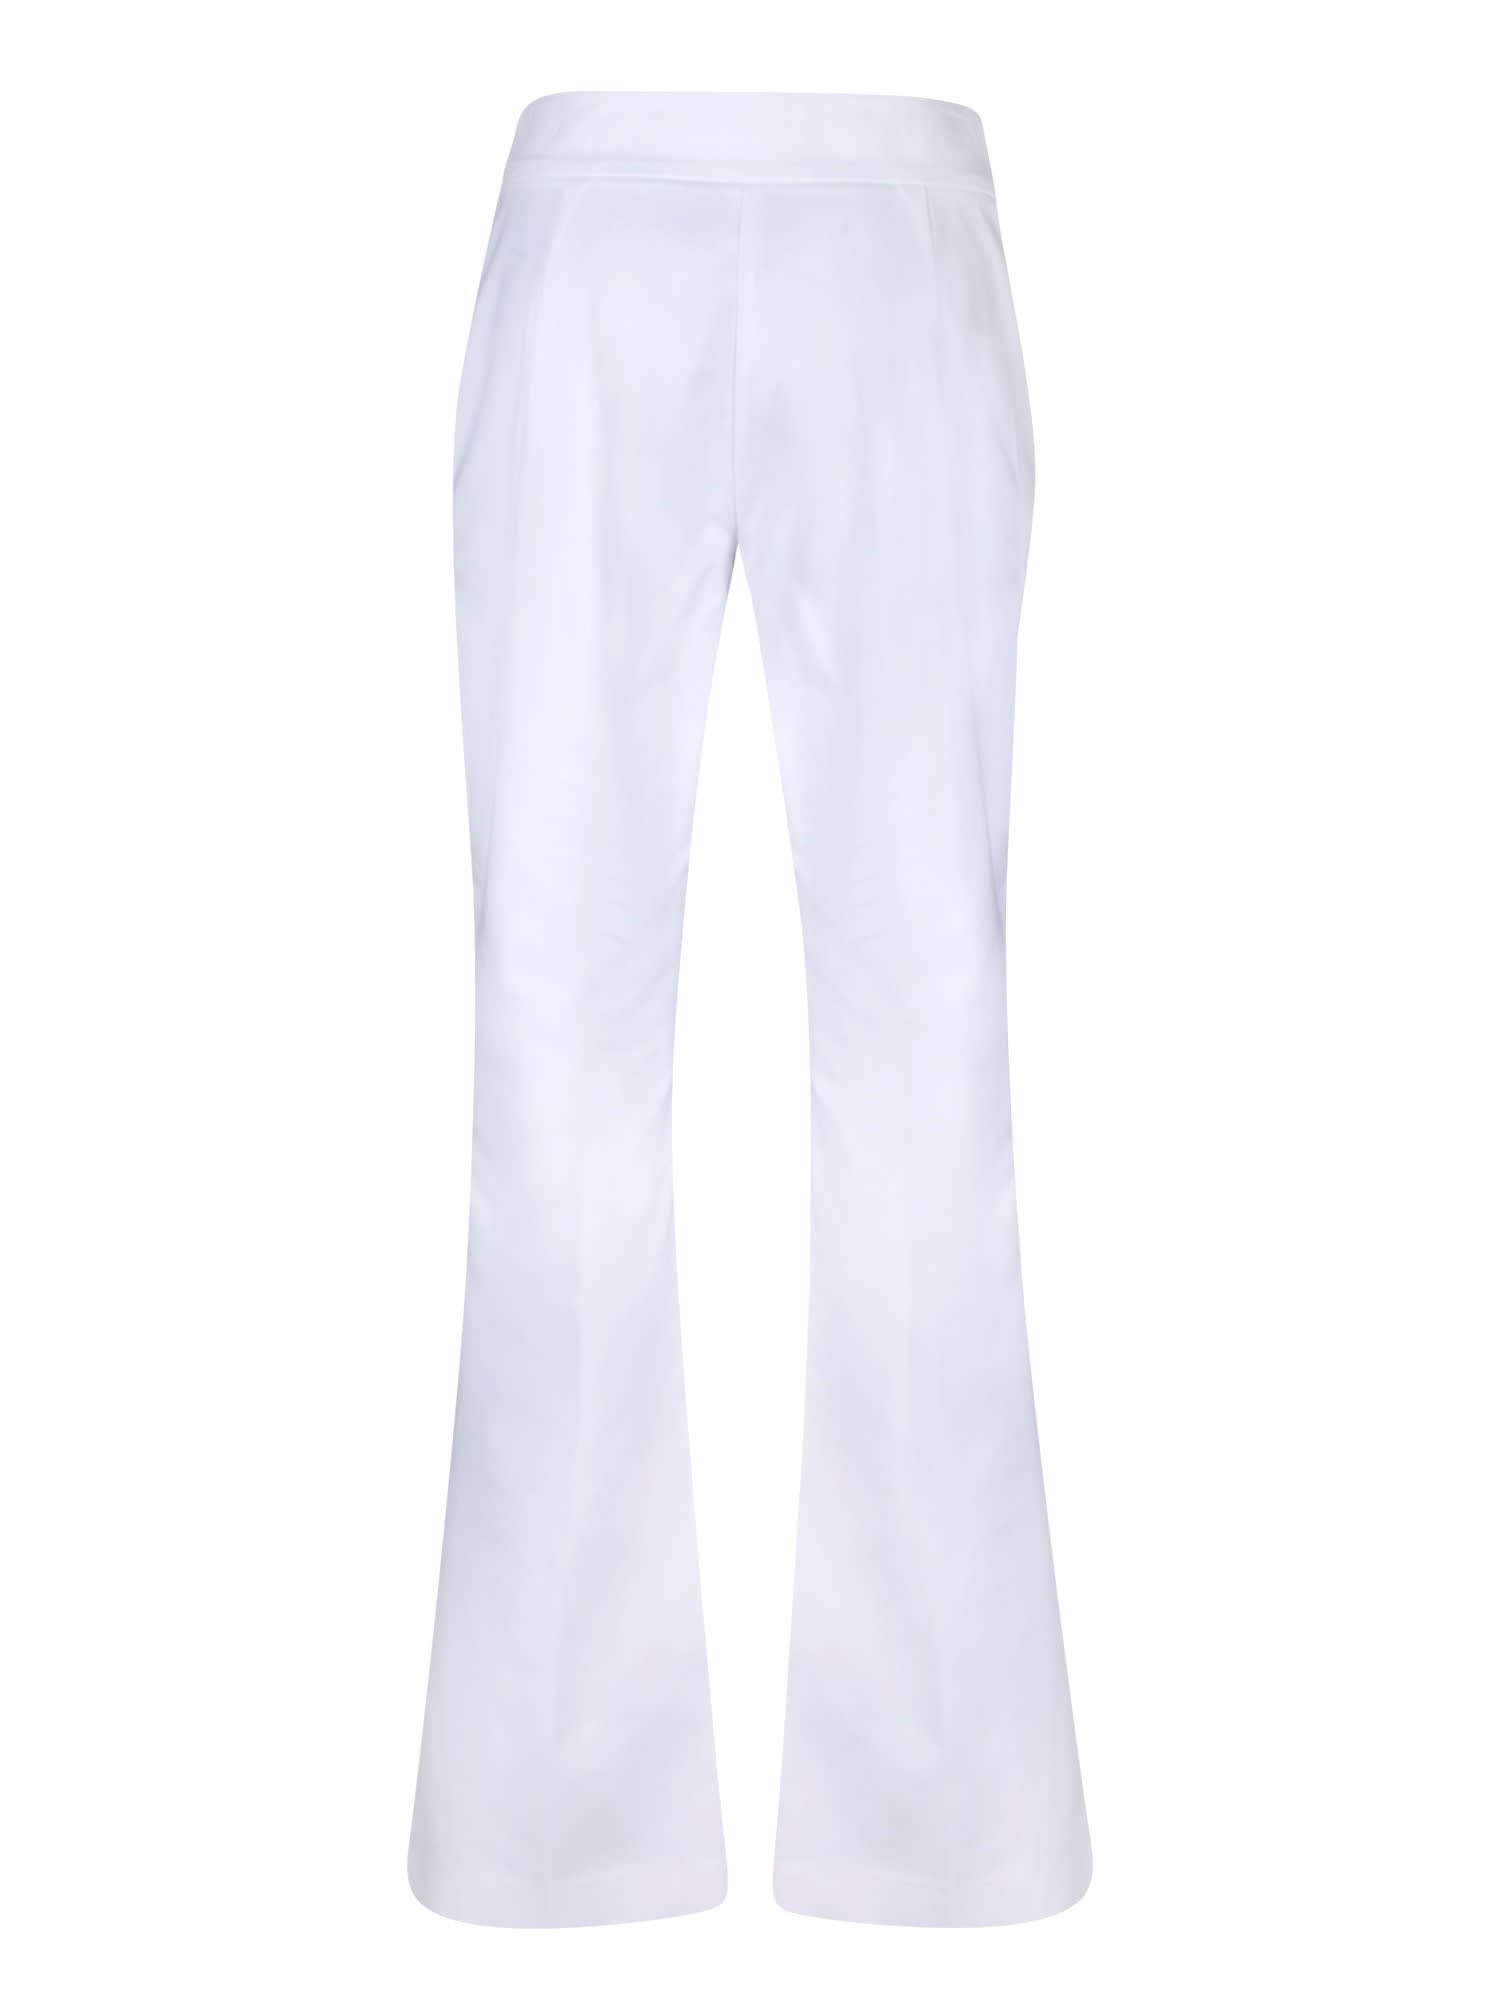 Shop Genny White Cotton Hopper Trousers